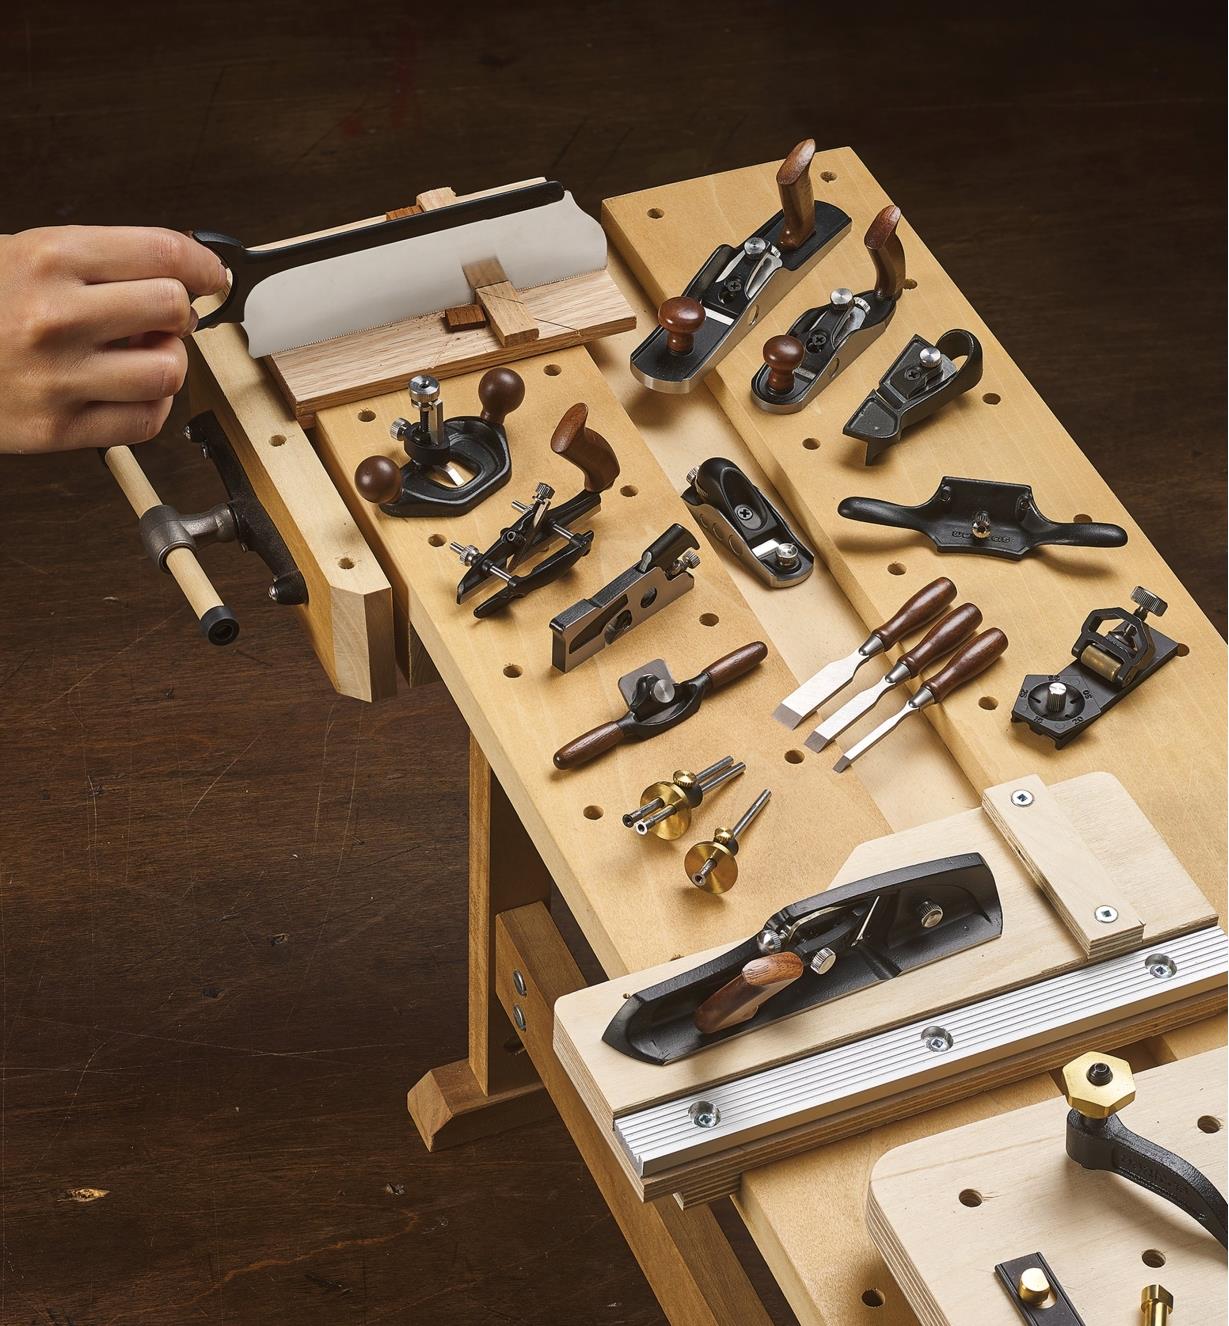 05P8280 - Complete Set of Miniature Tools